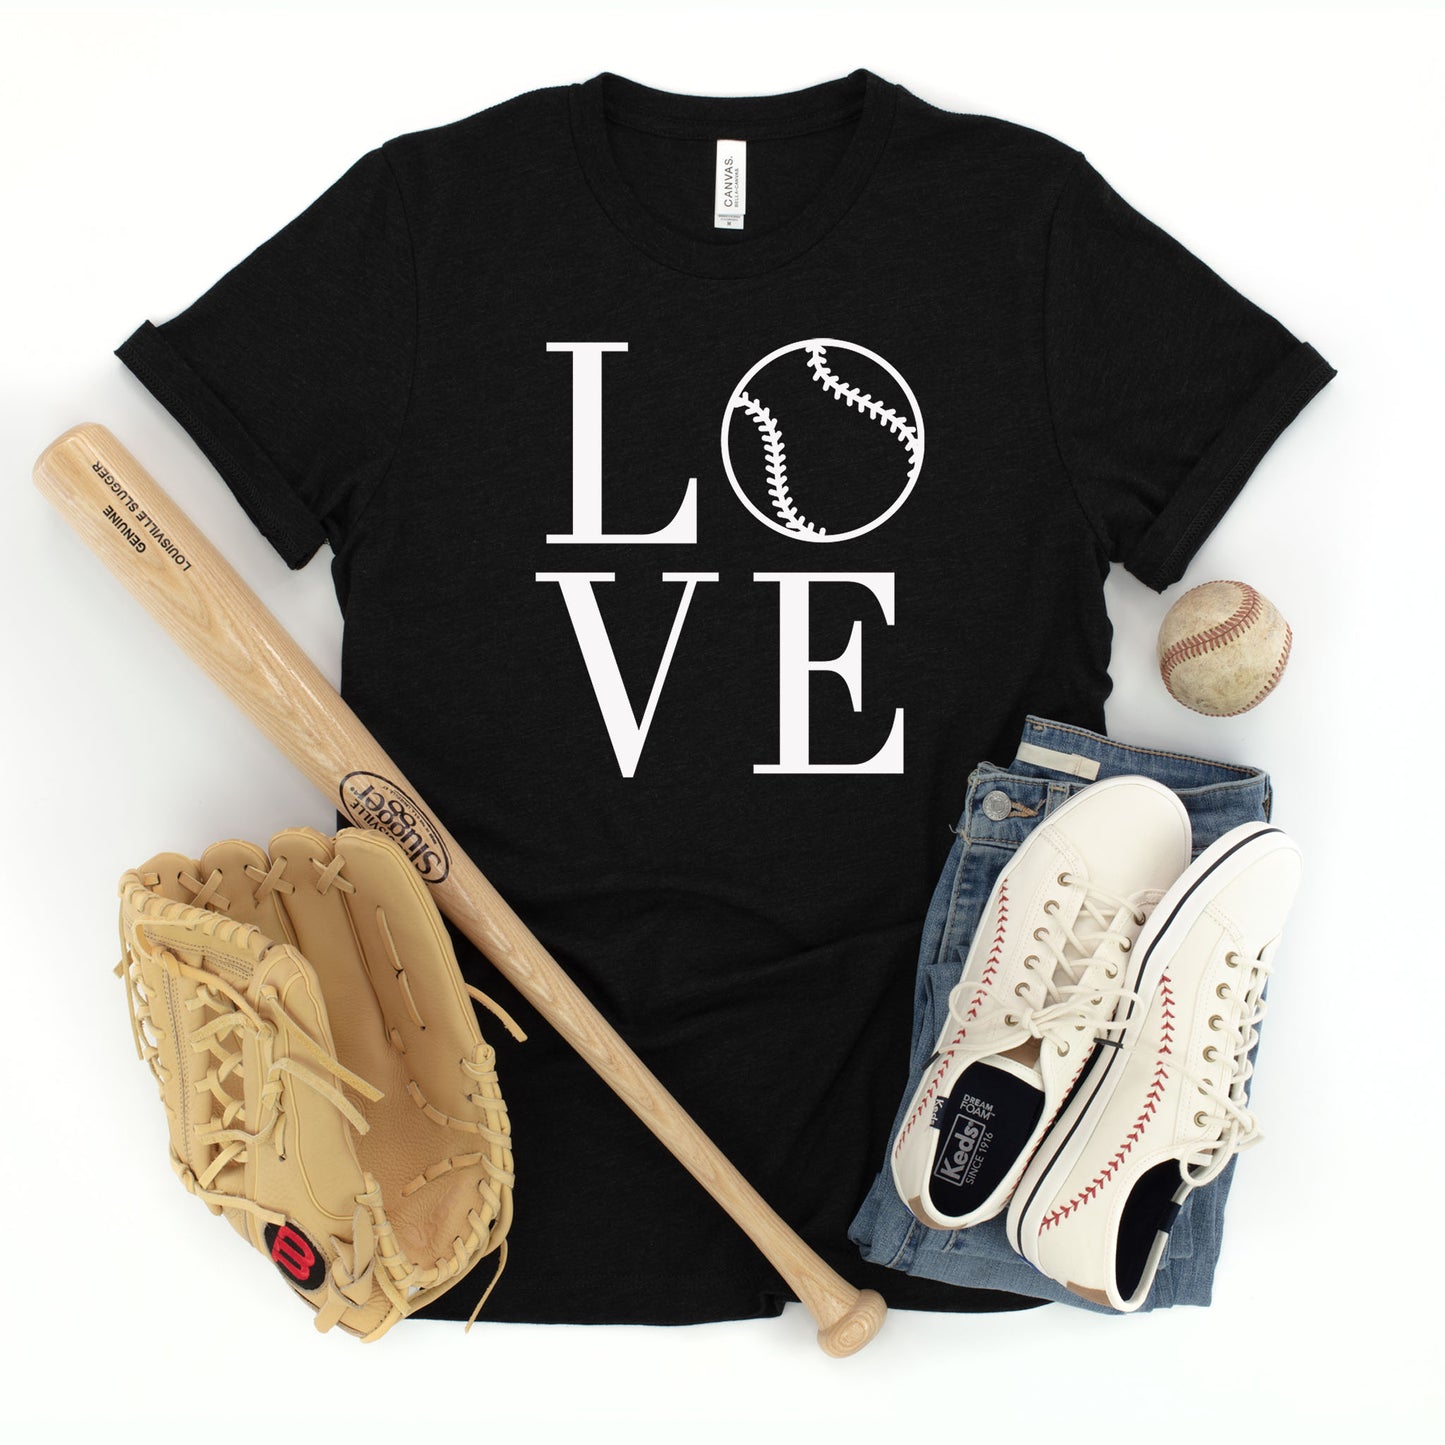 "Love Baseball" Black T-Shirt - (Adult Only)